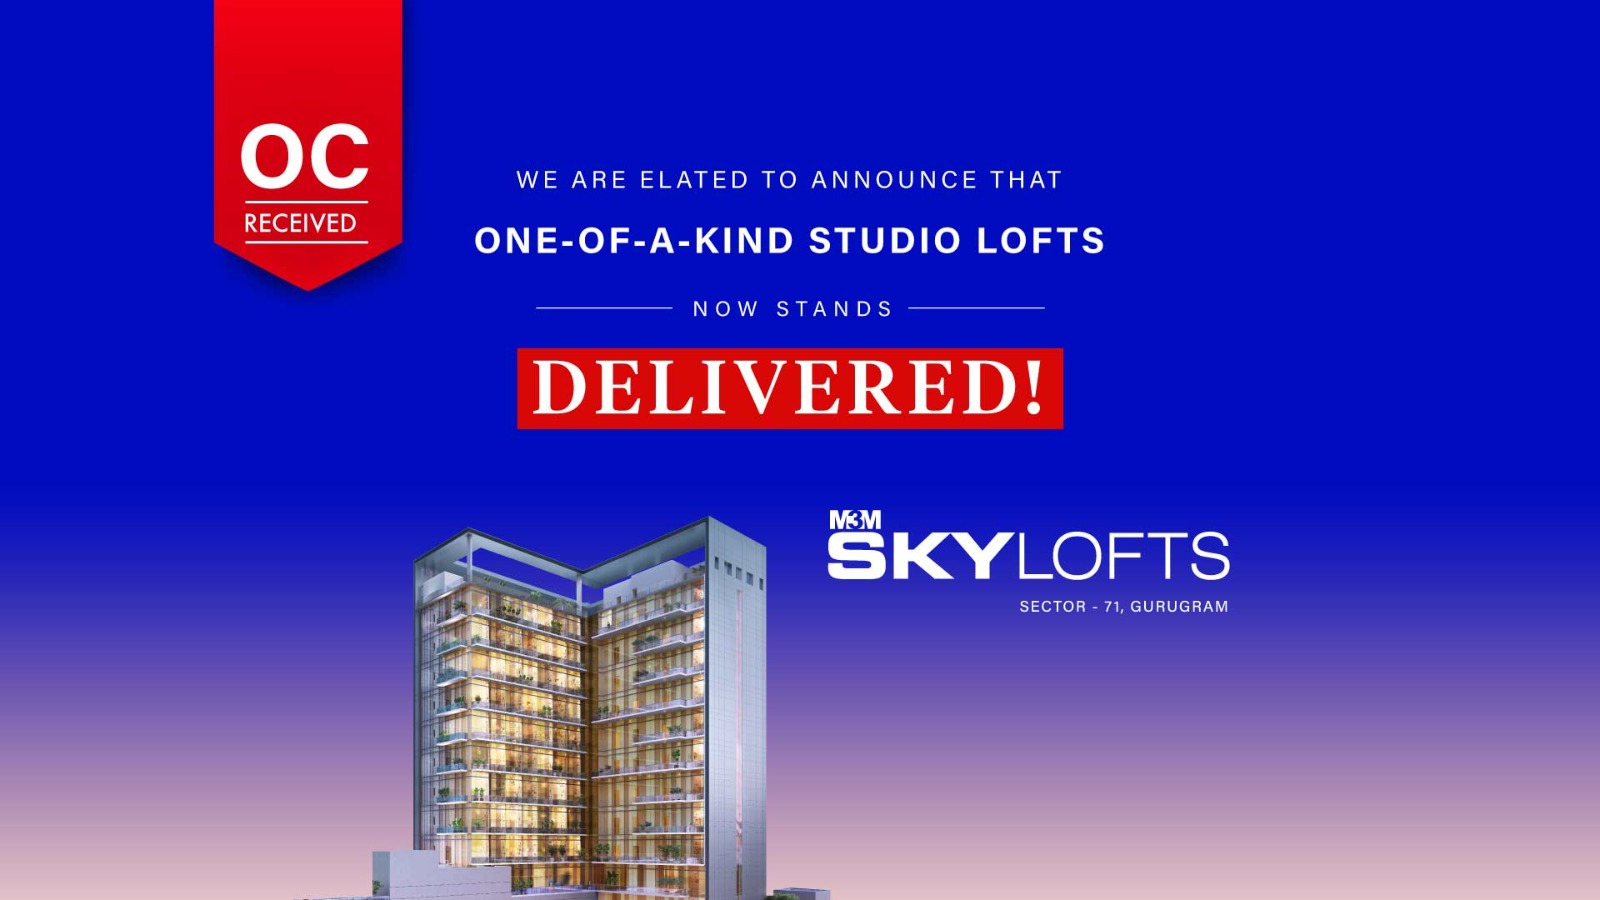 M3M Sky Lofts: The Pinnacle of Studio Living Now Delivered in Sector 71, Gurugram" Update